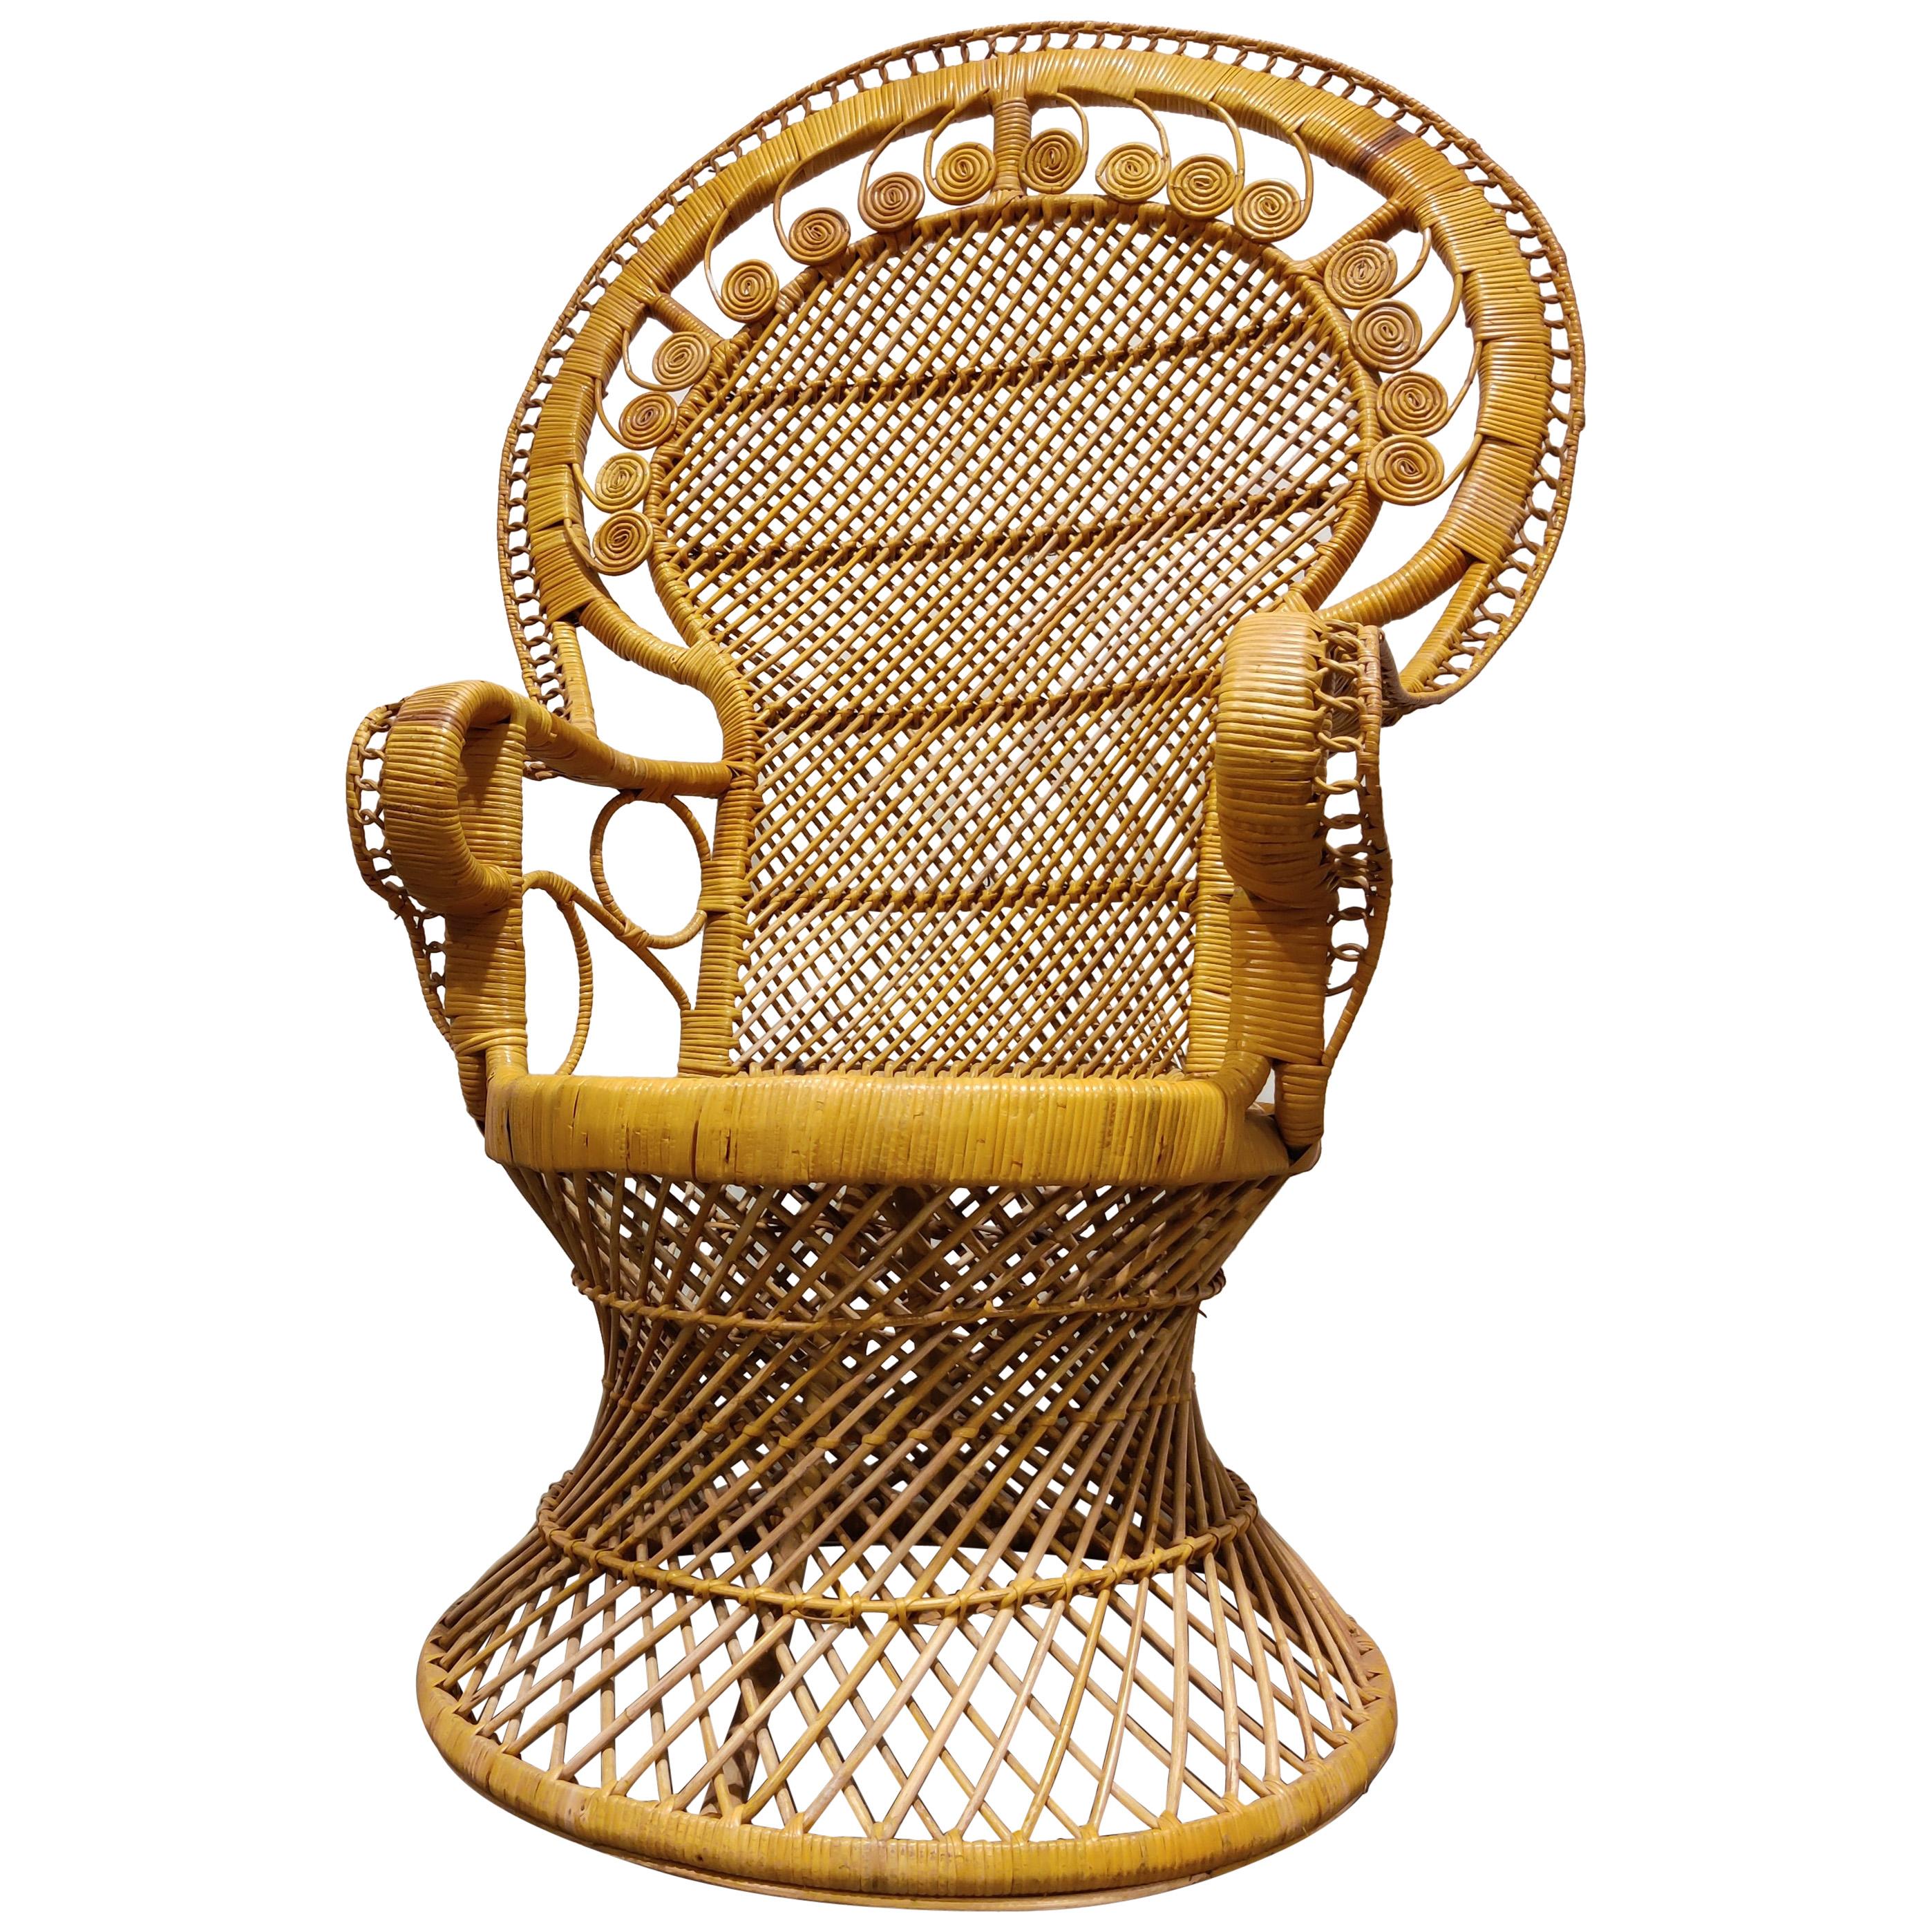 Vintage Wicker Peacock Chair, 1970s